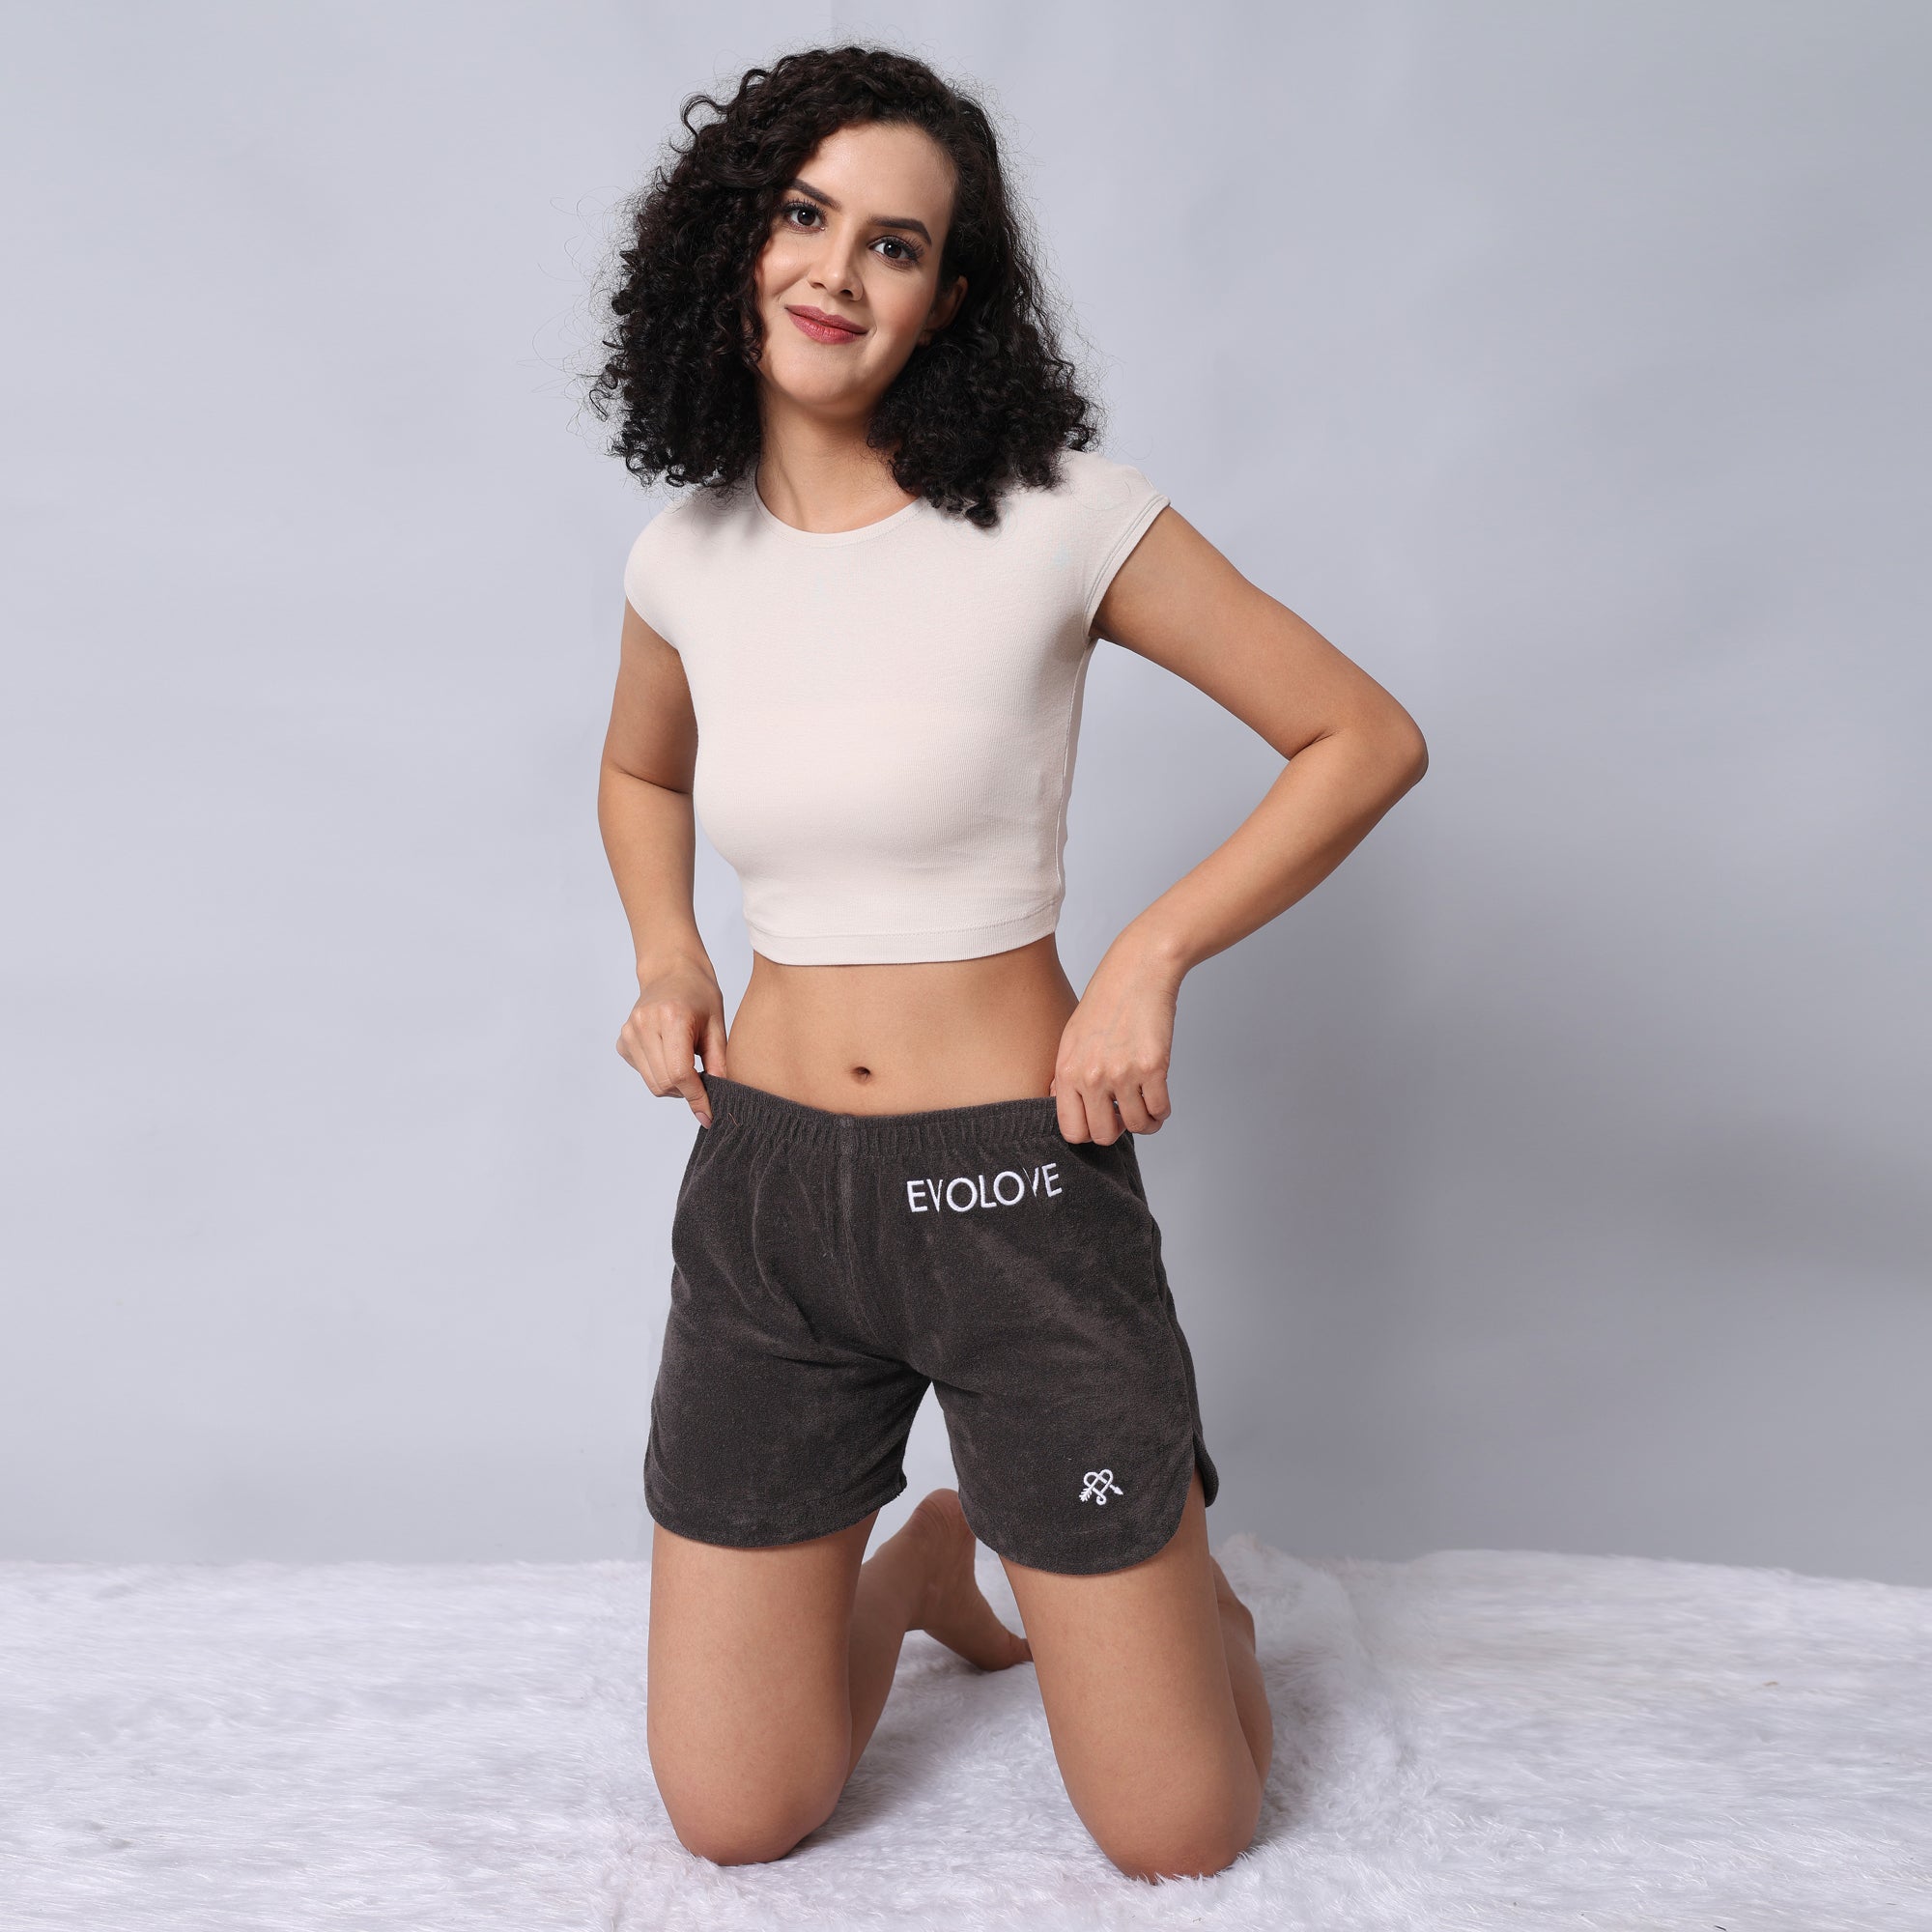 Evolove Women's Cotton Velvet Solid Shorts Super Soft Comfortable